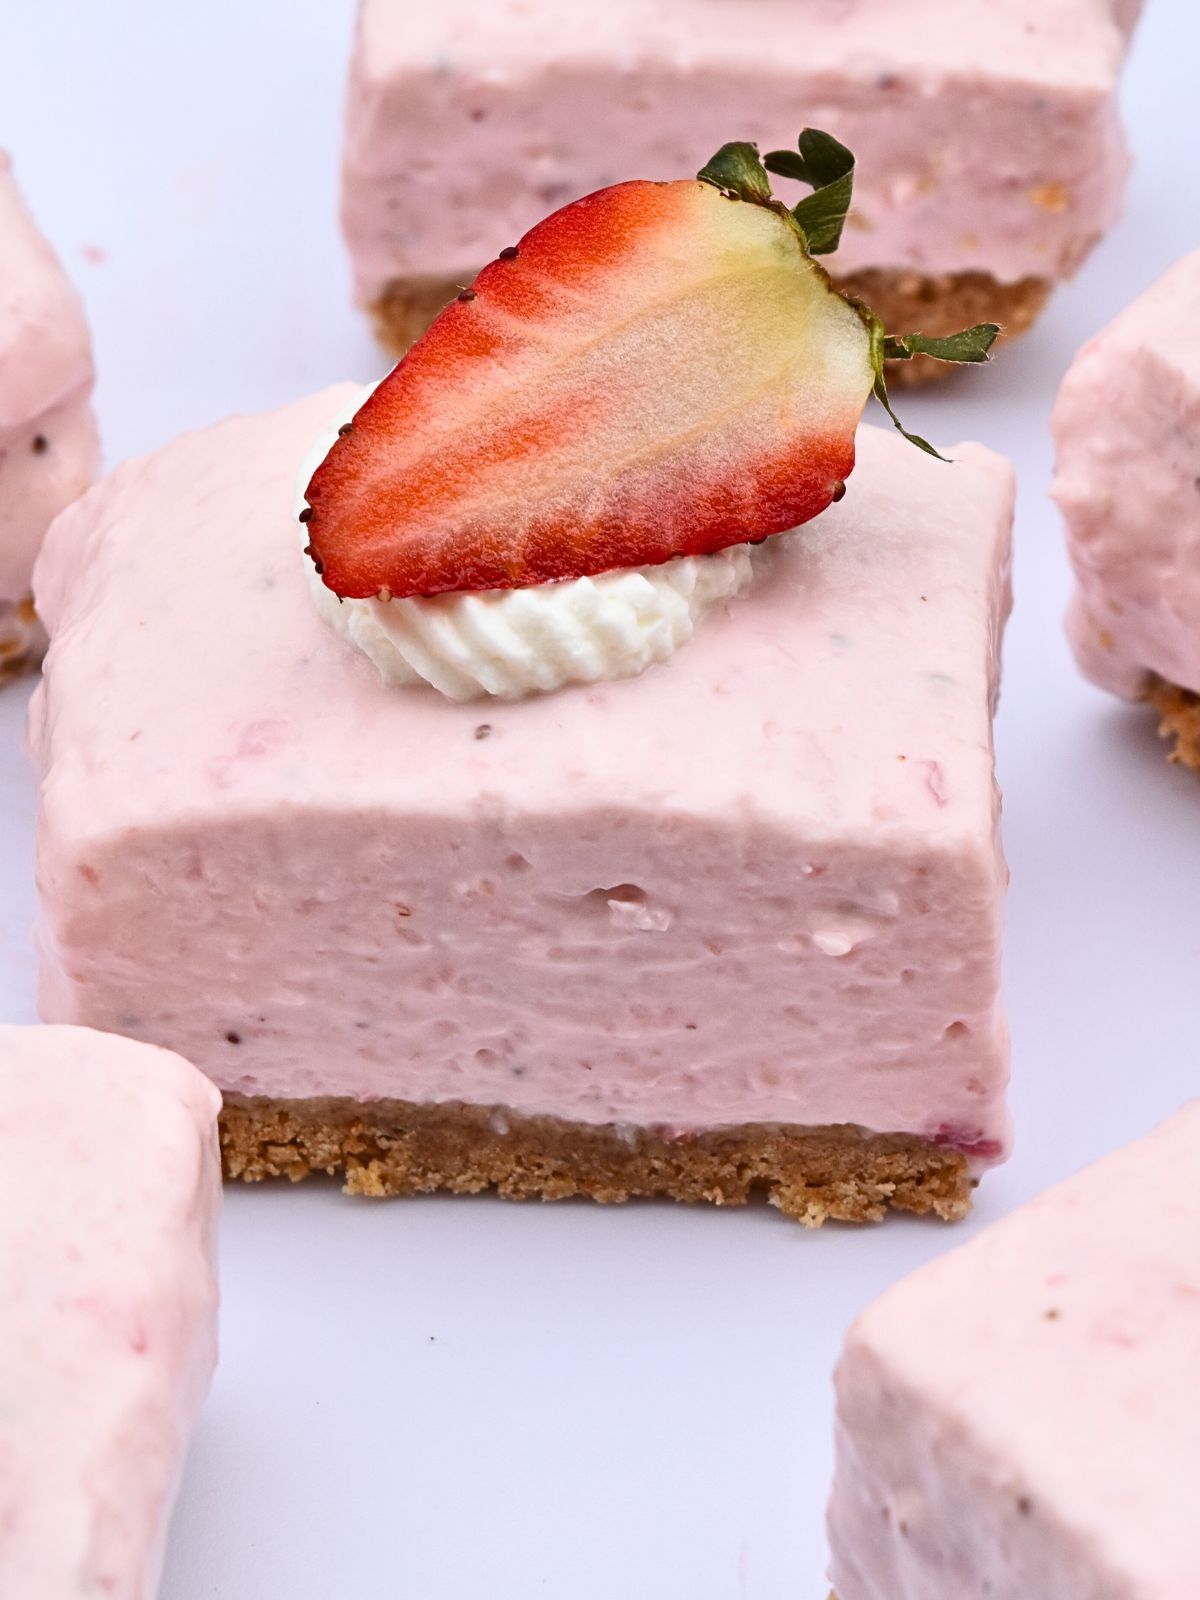 No bake strawberry cheesecake bars without gelatin